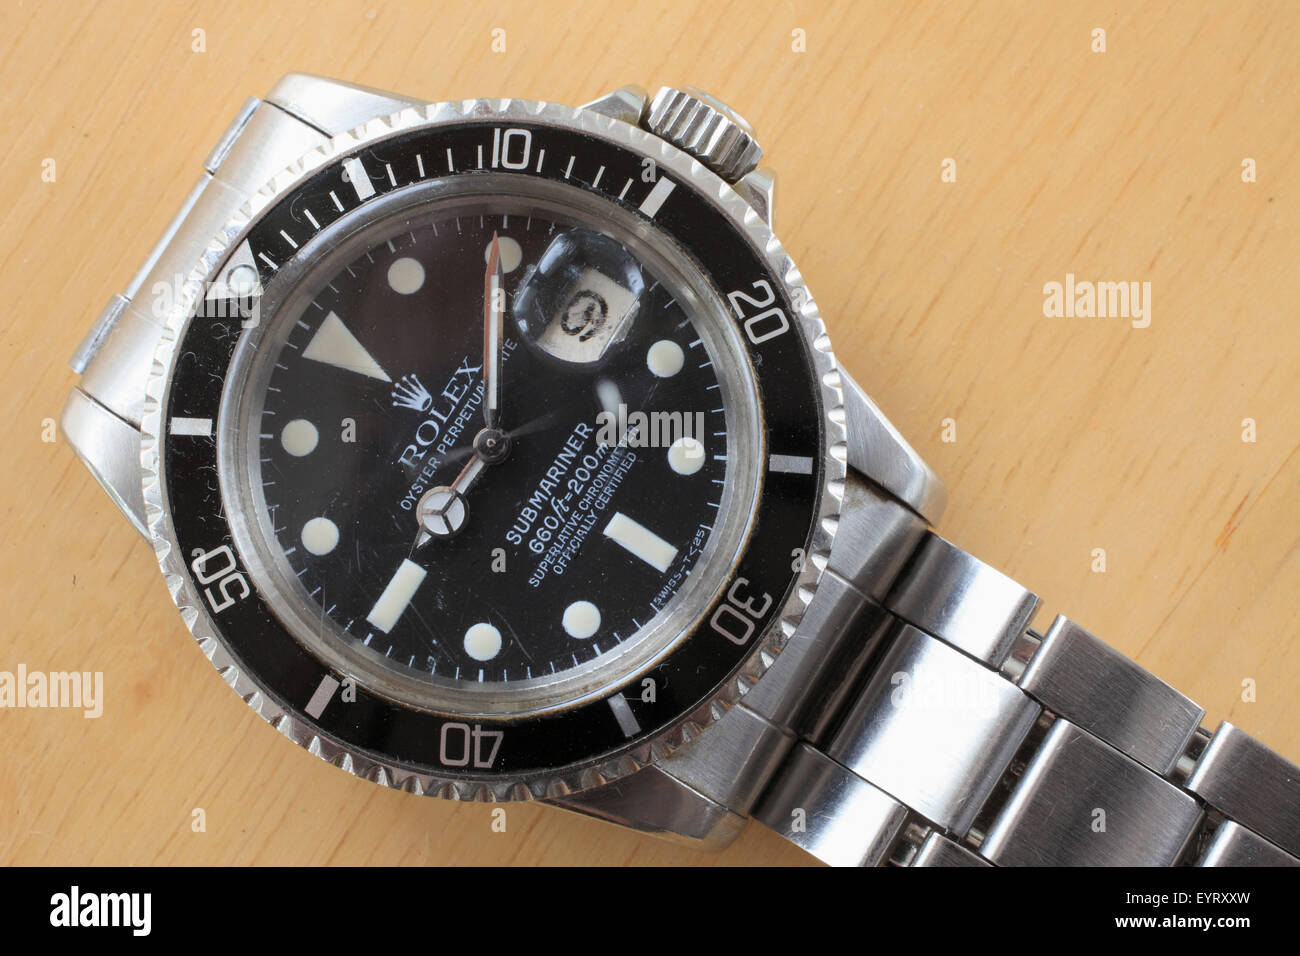 Rolex watch Stock Photo